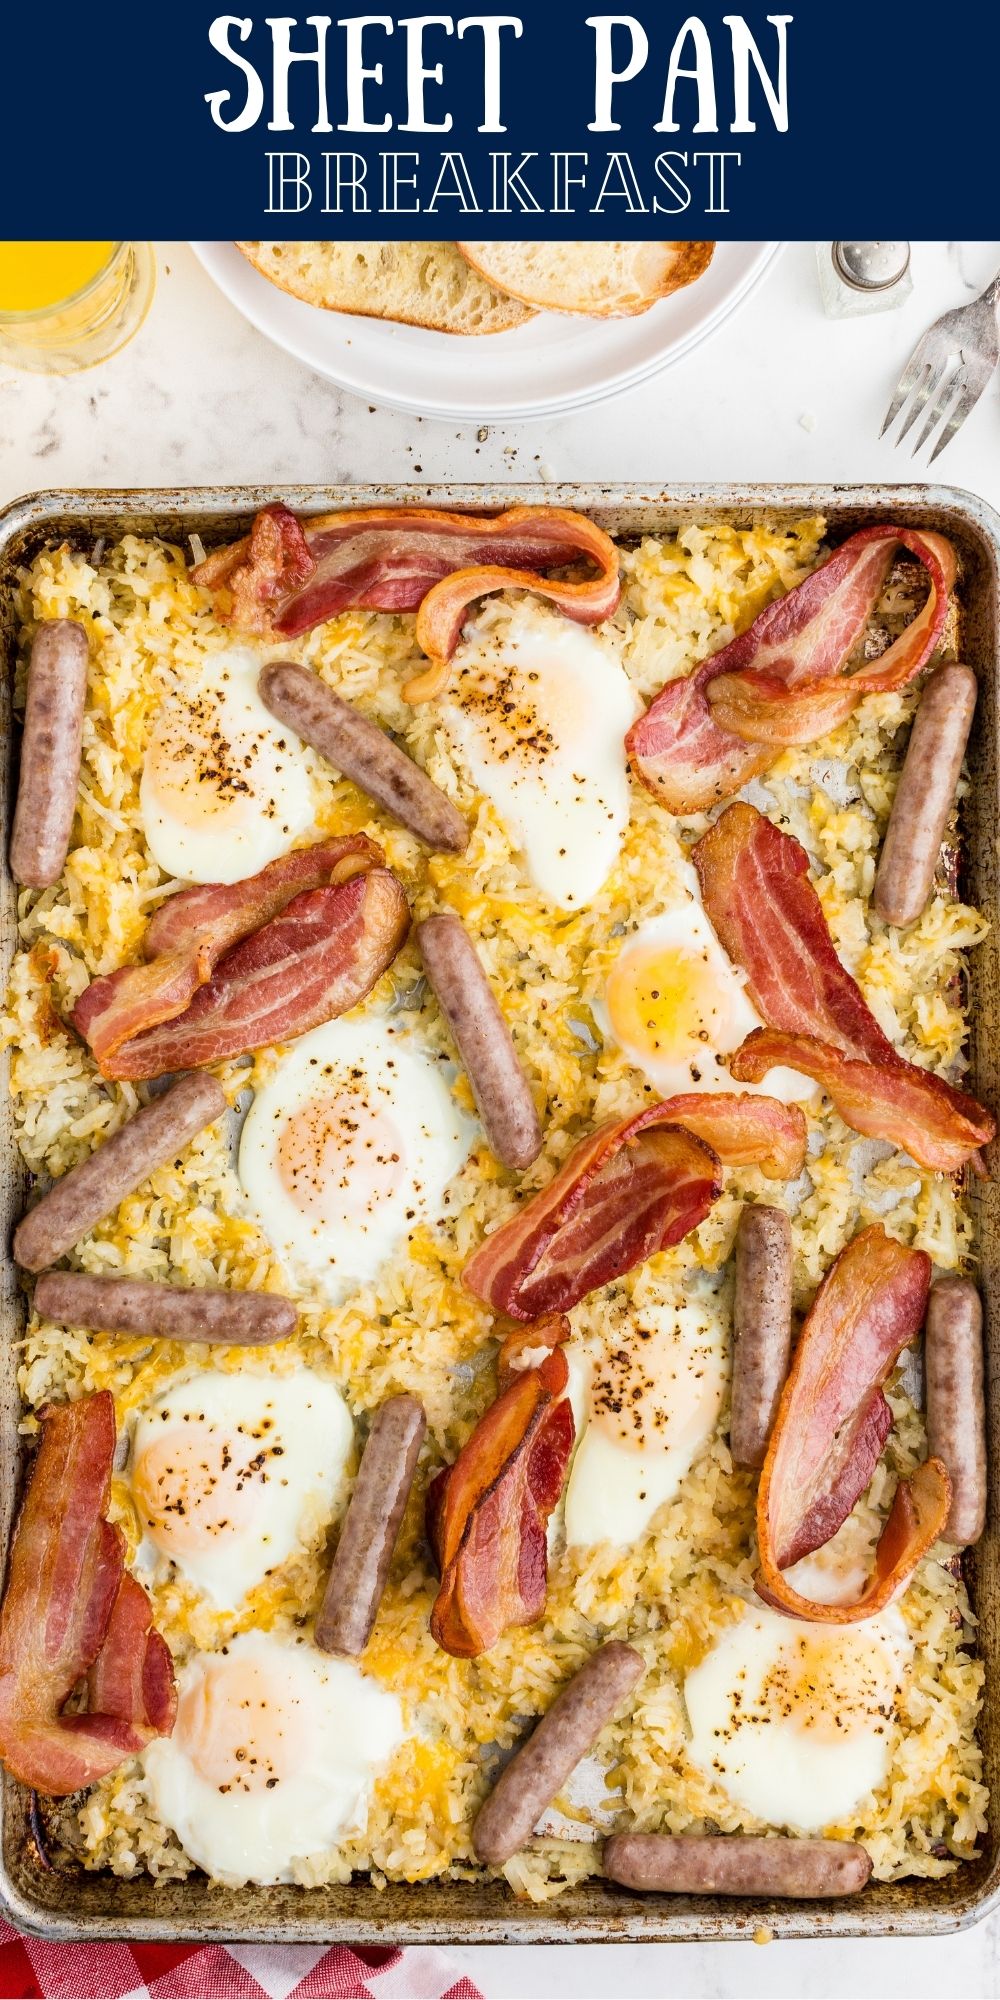 https://www.familyfreshmeals.com/wp-content/uploads/2021/09/Sheet-Pan-Breakfast-recipe-from-Family-Fresh-Meals.jpg